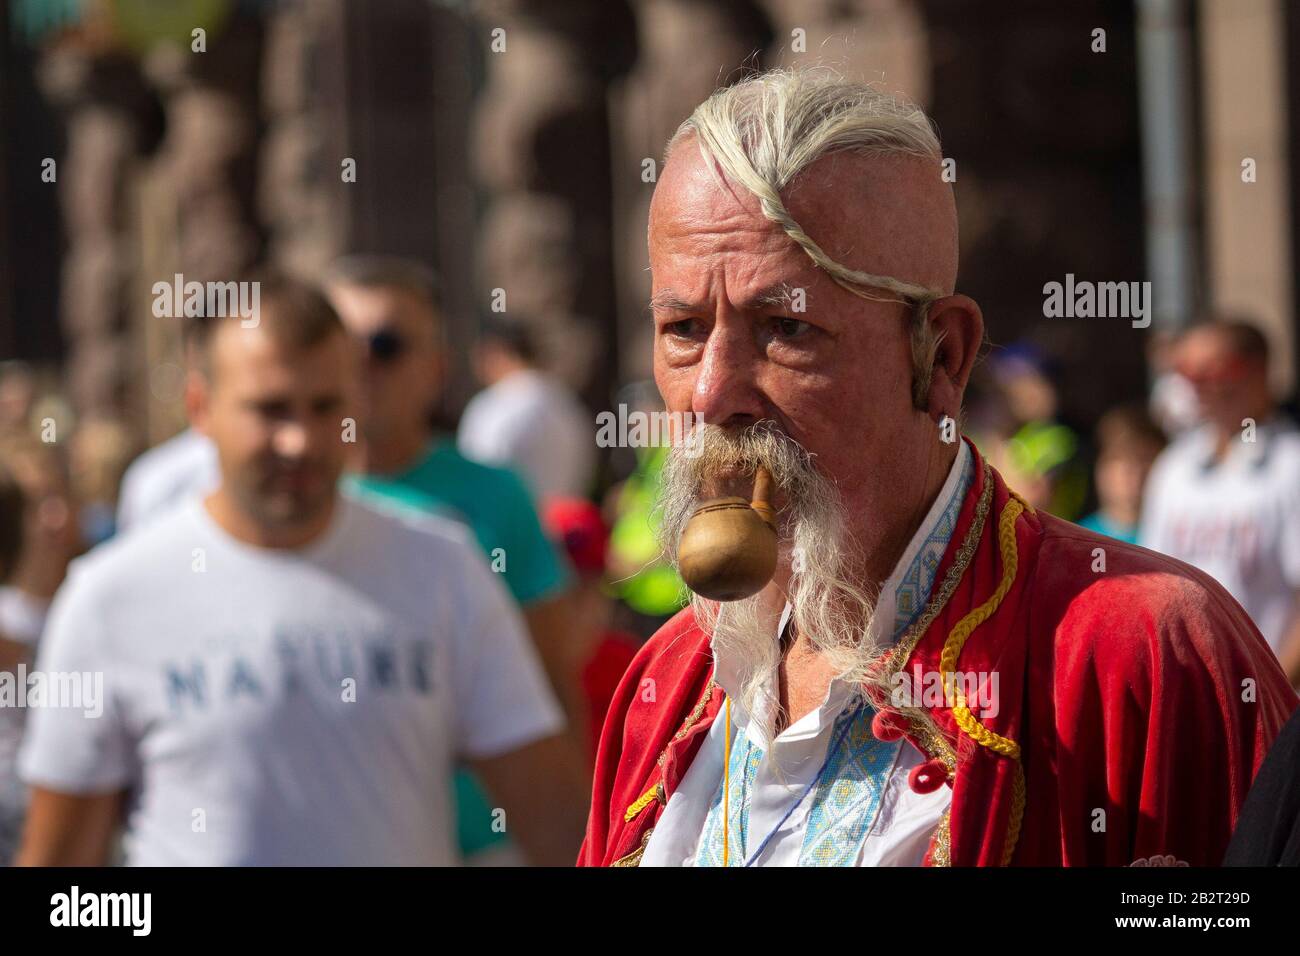 Kiev, Ukraine - August 24, 2019: Elderly man in a historical costume during the celebration of Cossack Independence Day of Ukraine on Khreschatyk Stre Stock Photo